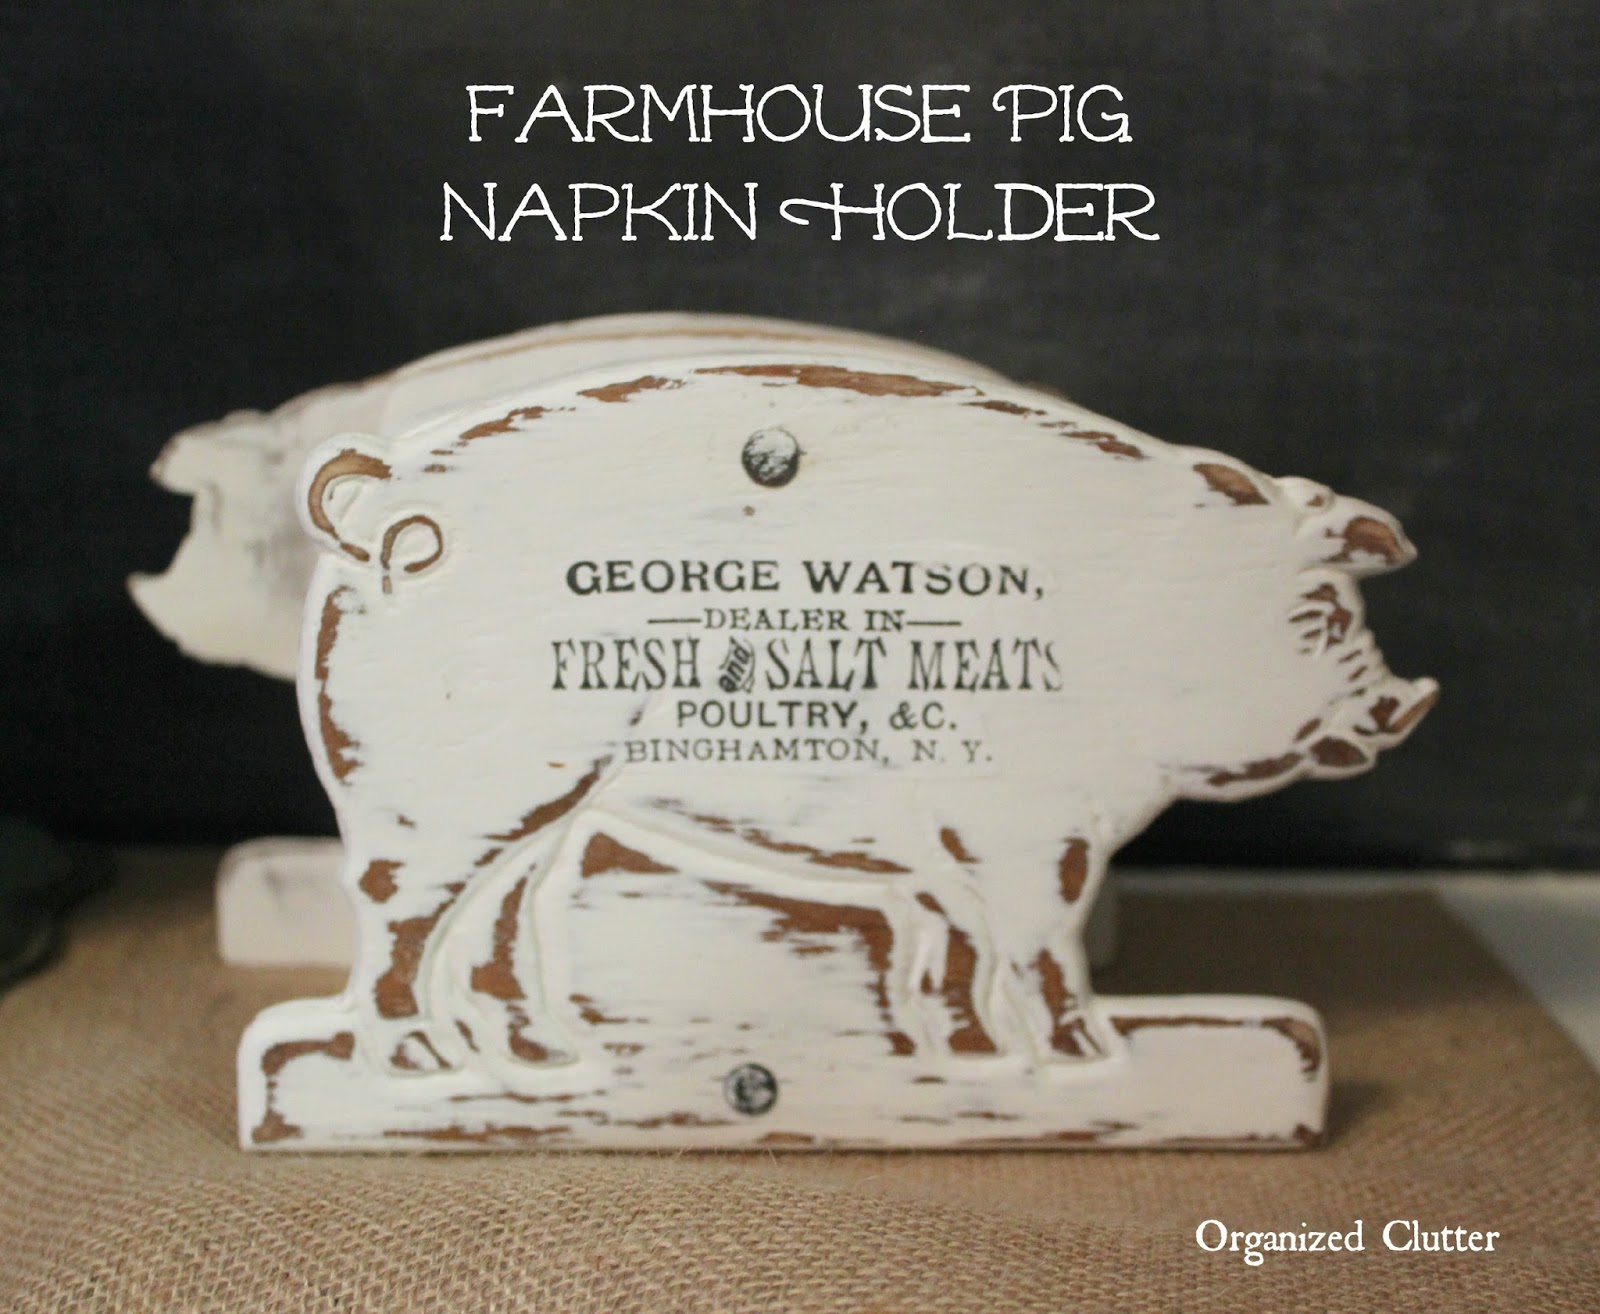 Farmhouse Style Pig Napkin Holder www.organizedclutterqueen.blogspot.com